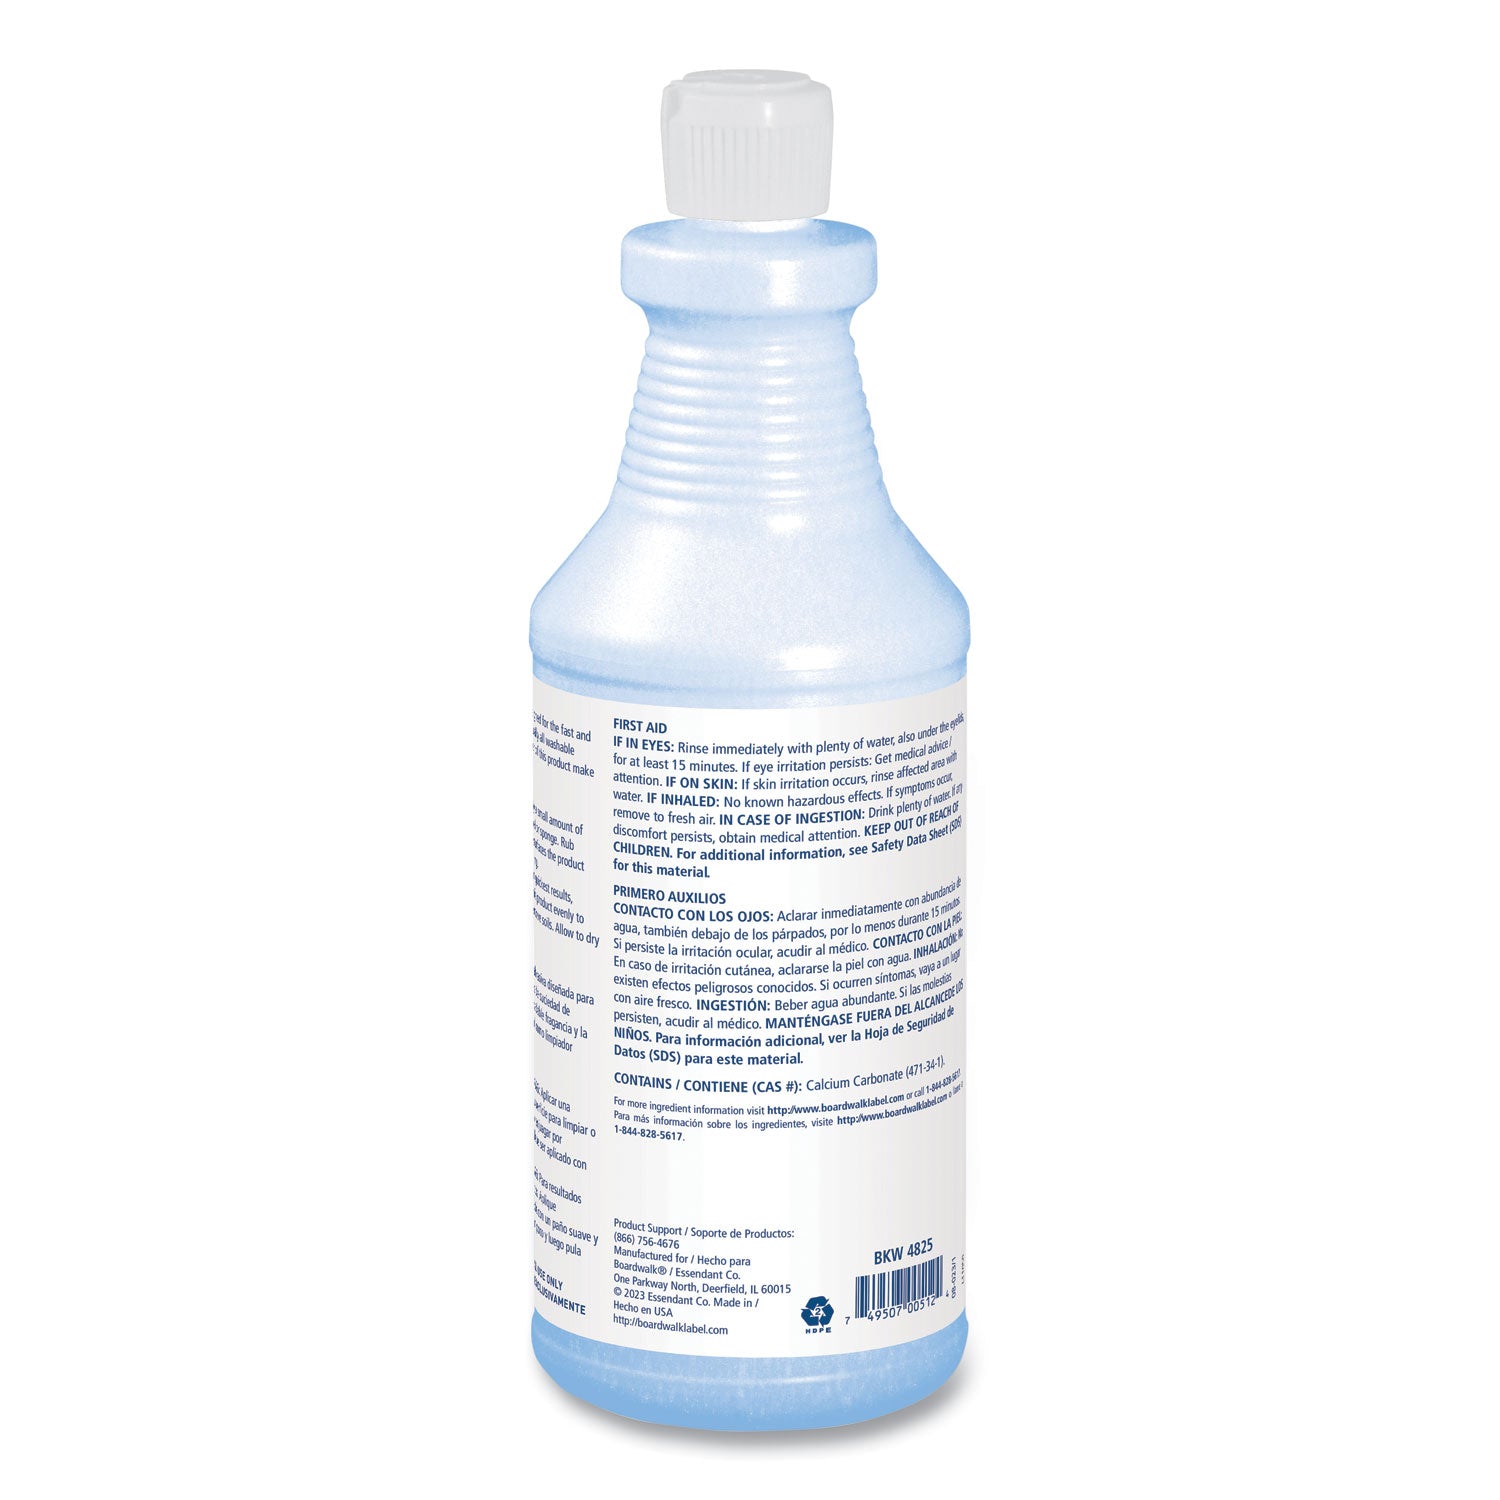 creme-cleanser-baby-powder-scent-32-oz-bottle12-carton_bwk4825 - 3